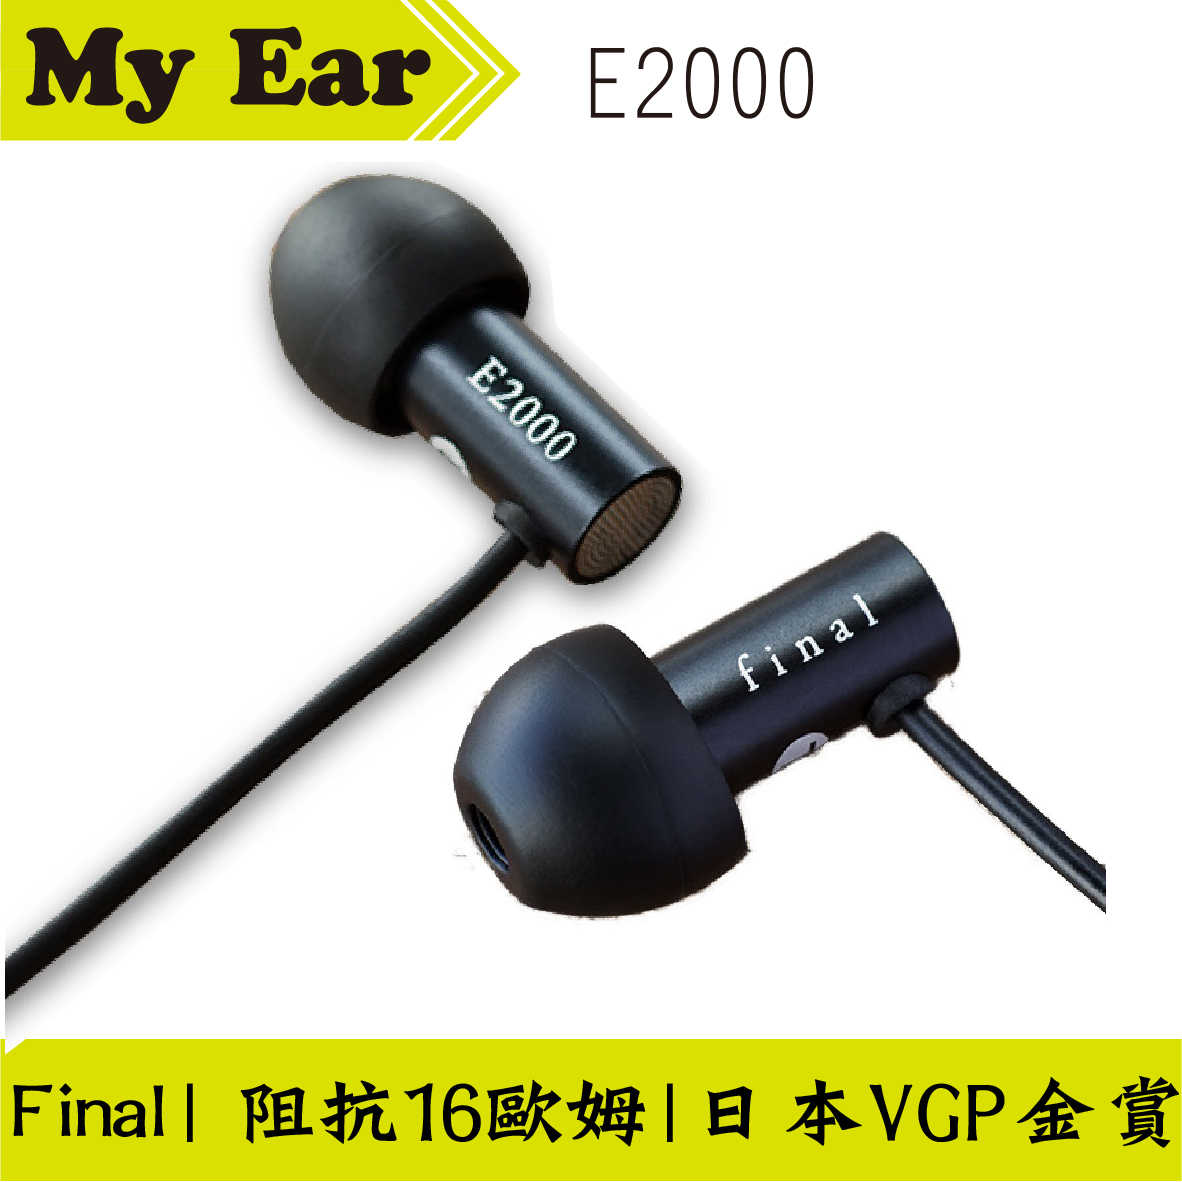 Final E2000 入耳式 耳機 日本VGP金賞 激推 | My Ear 耳機專門店